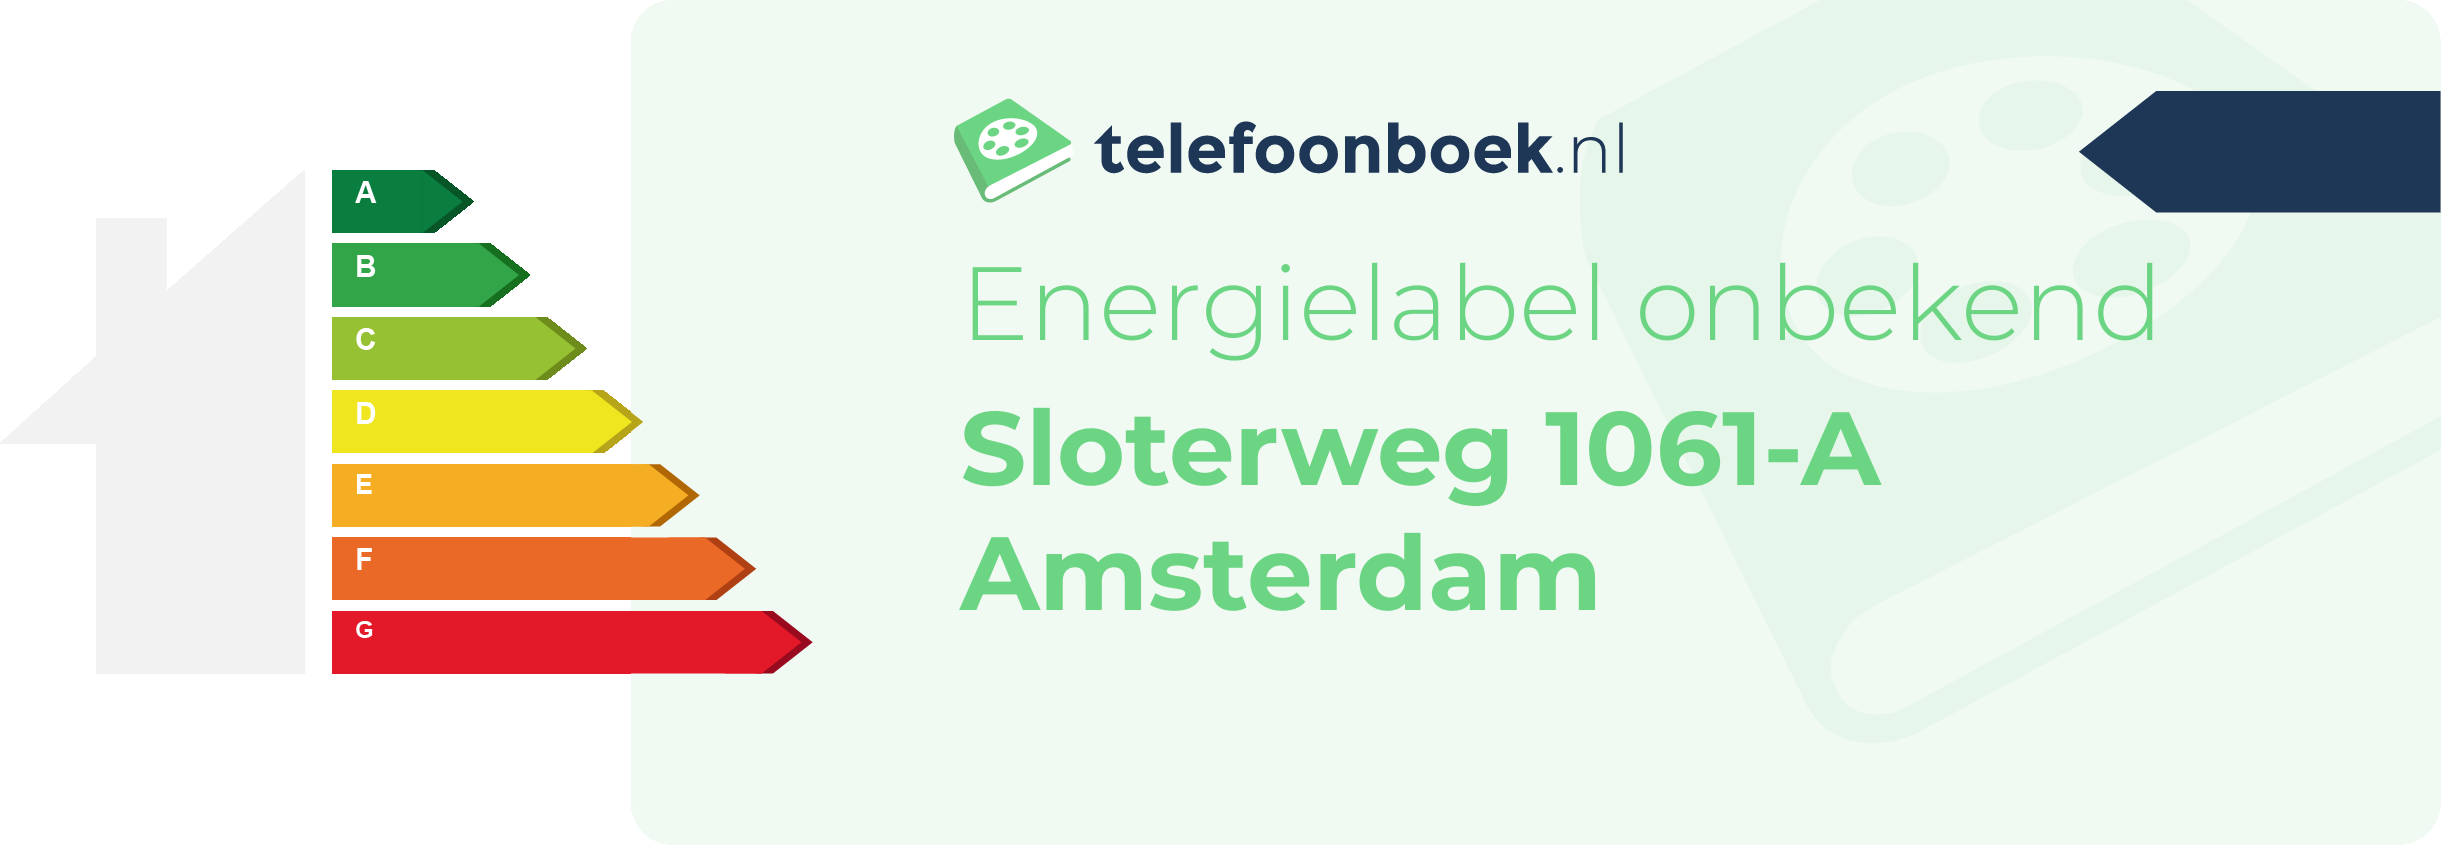 Energielabel Sloterweg 1061-A Amsterdam